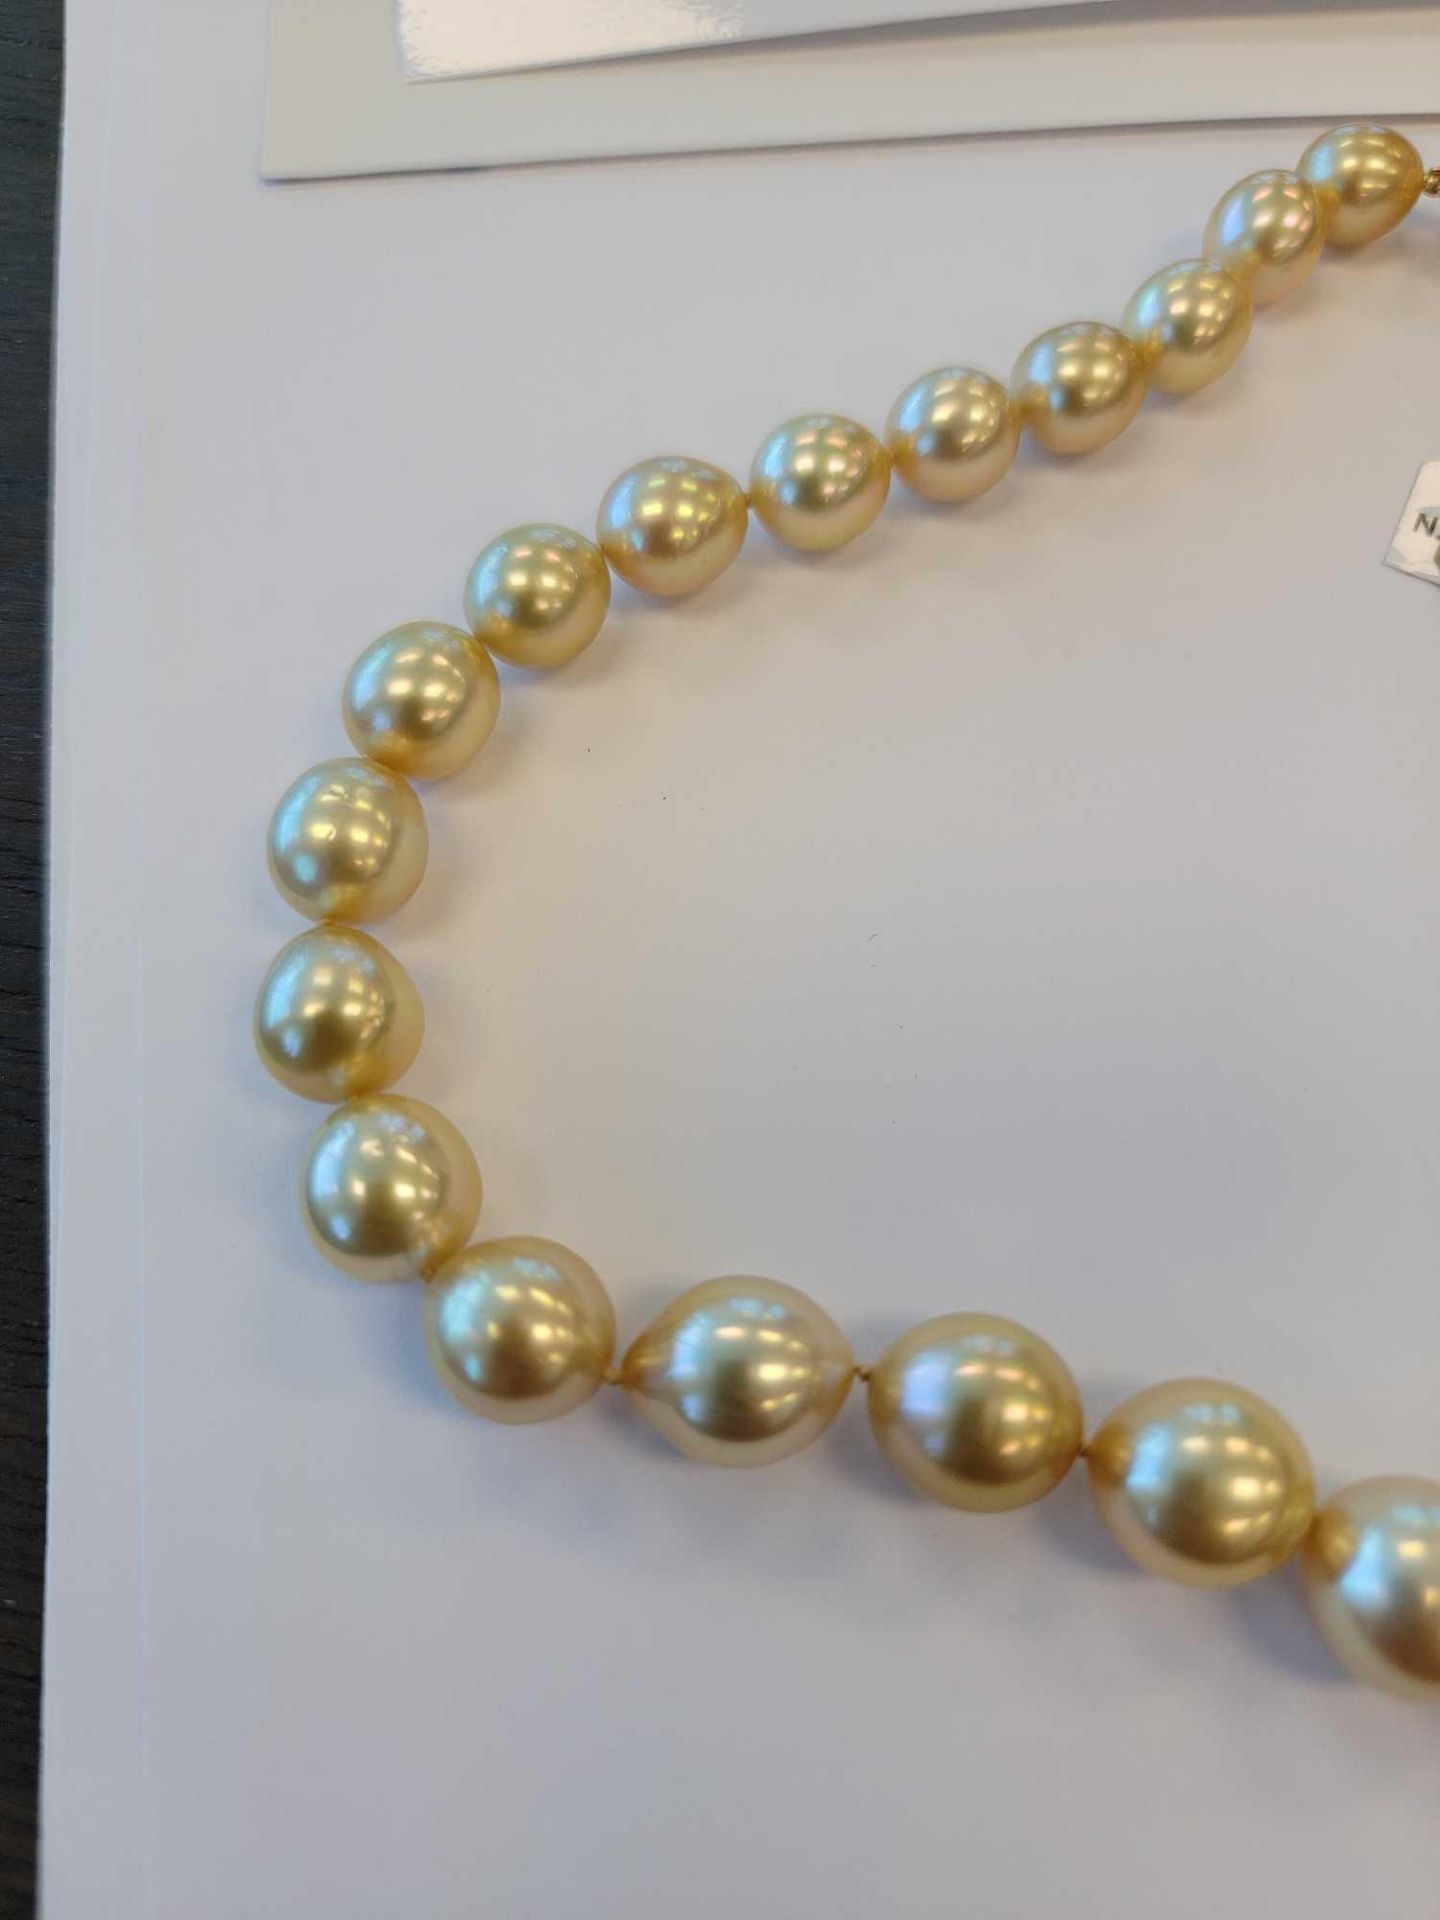 Rare Natural Golden South Sea Pearls, 33 south sea pearls - Image 7 of 7